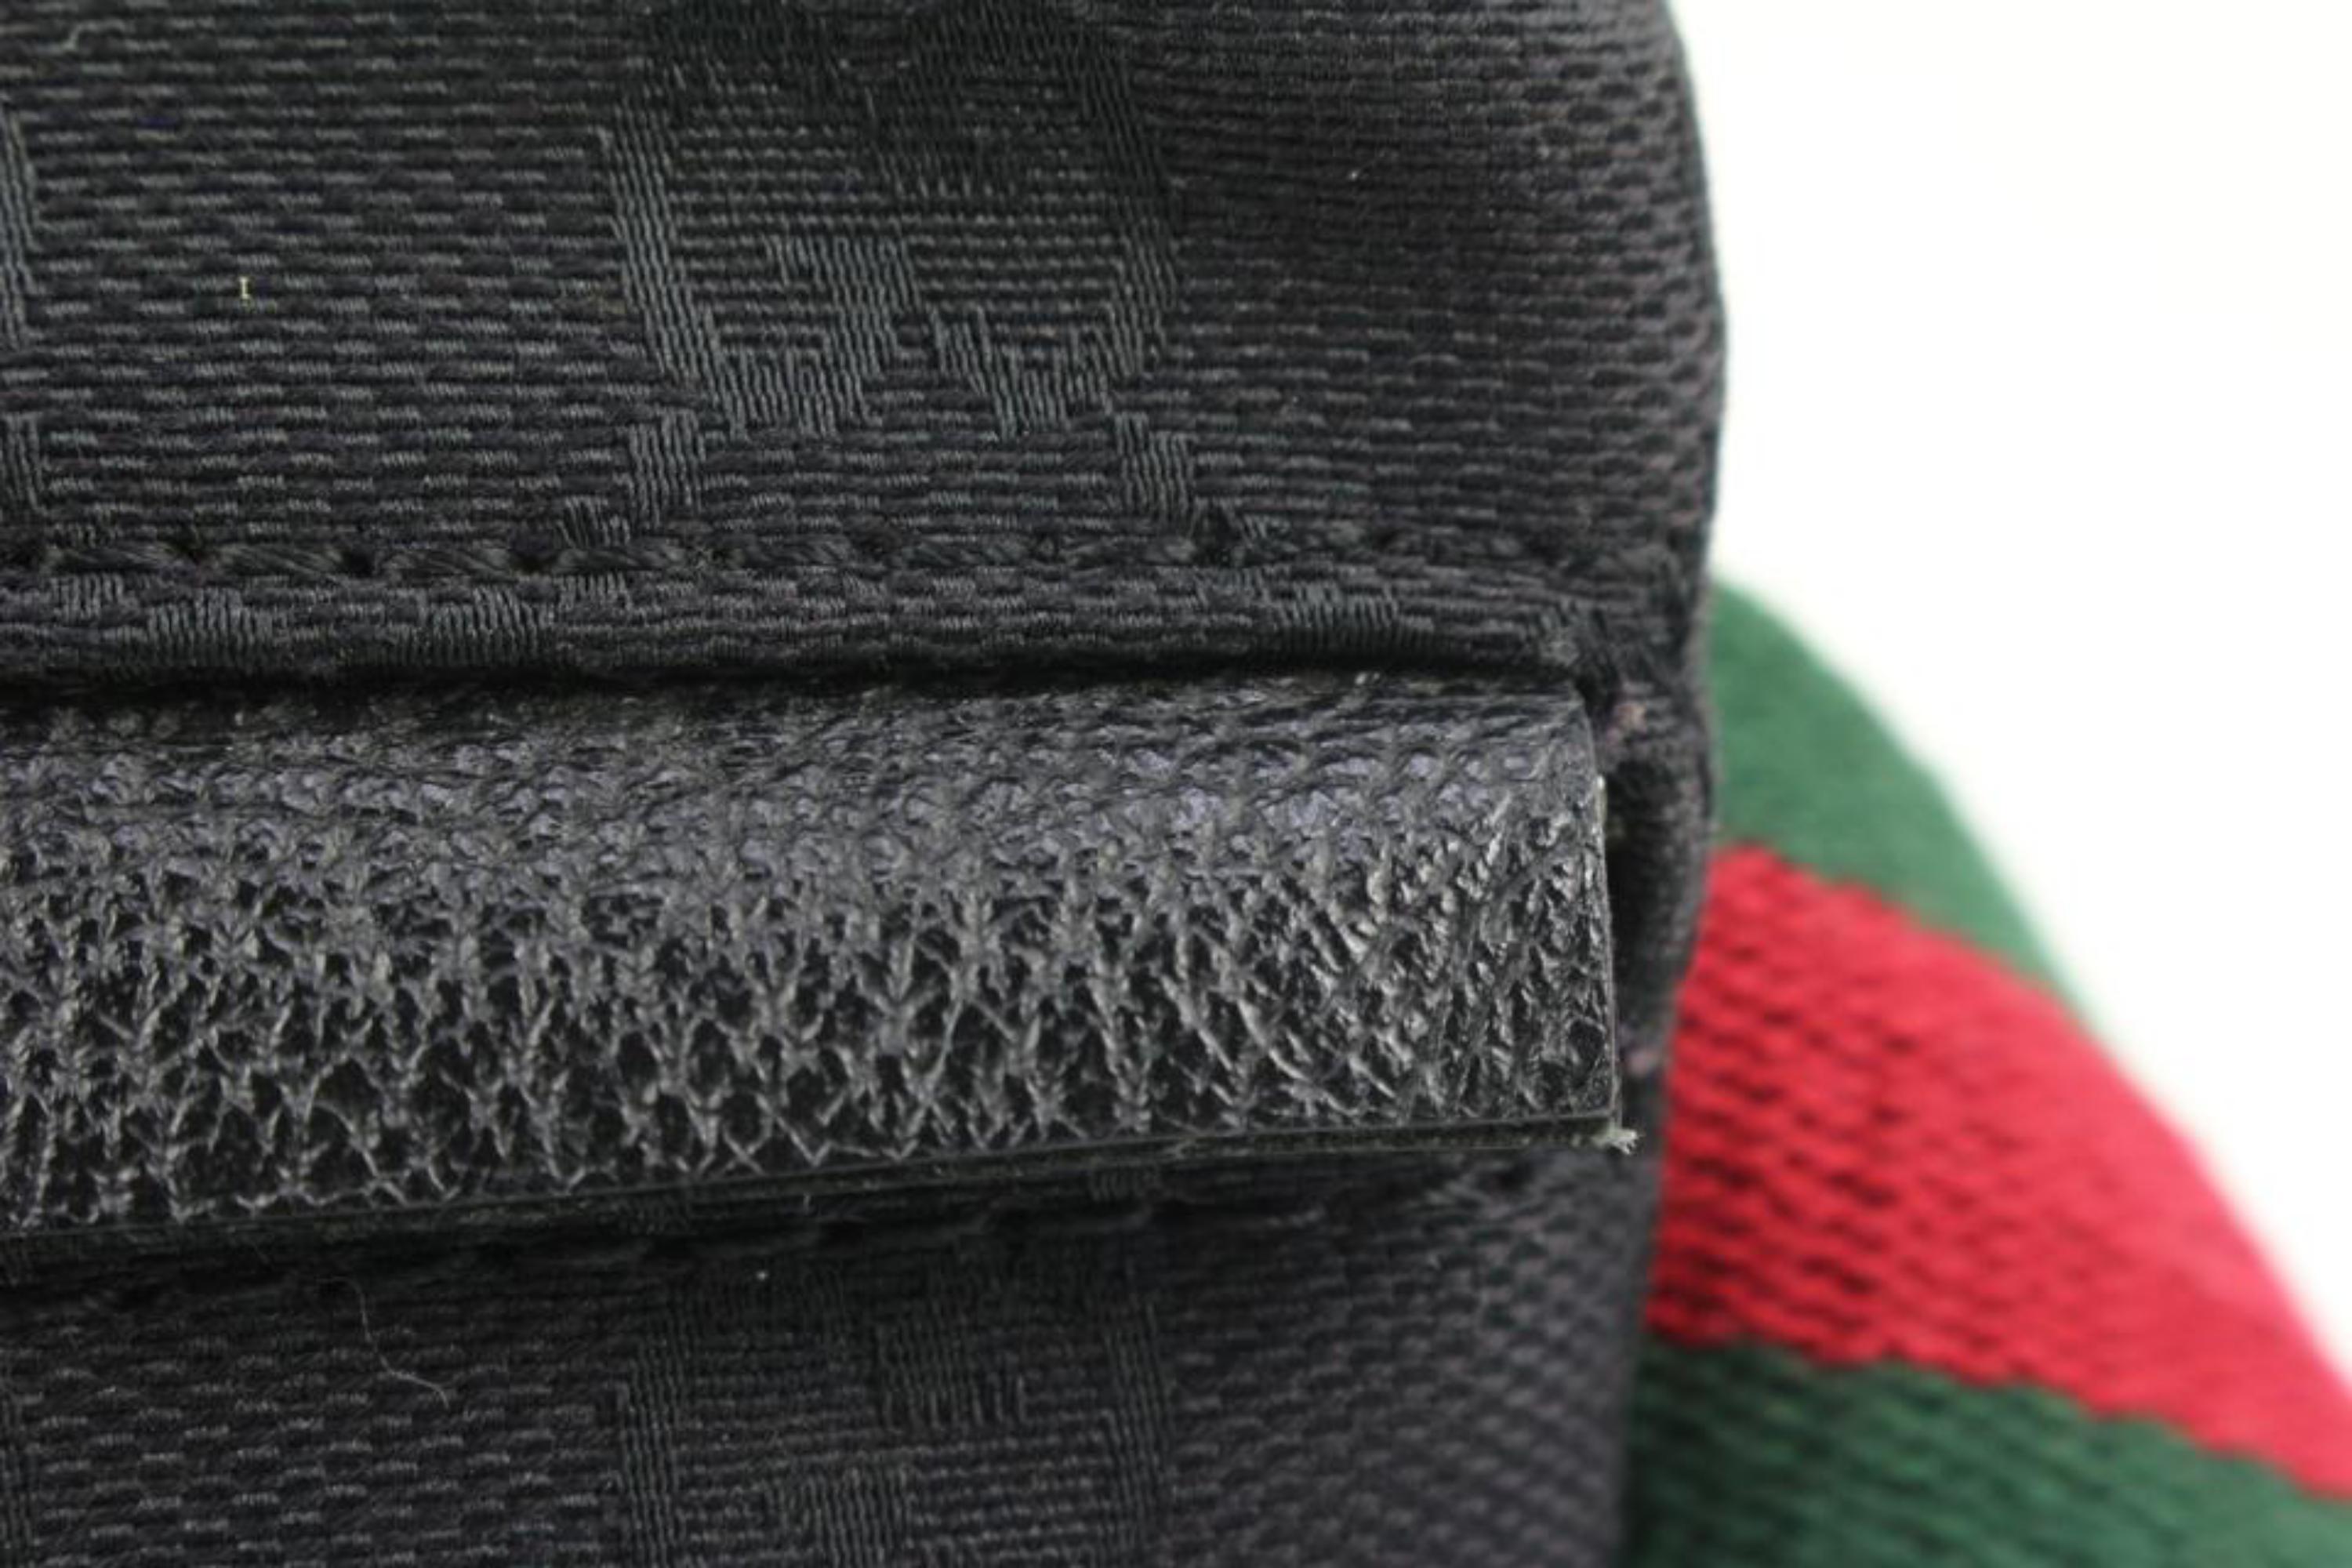 Gucci Rare Discontinued Black Monogram GG Web Belt Bag Fanny Pack 22g131s 4